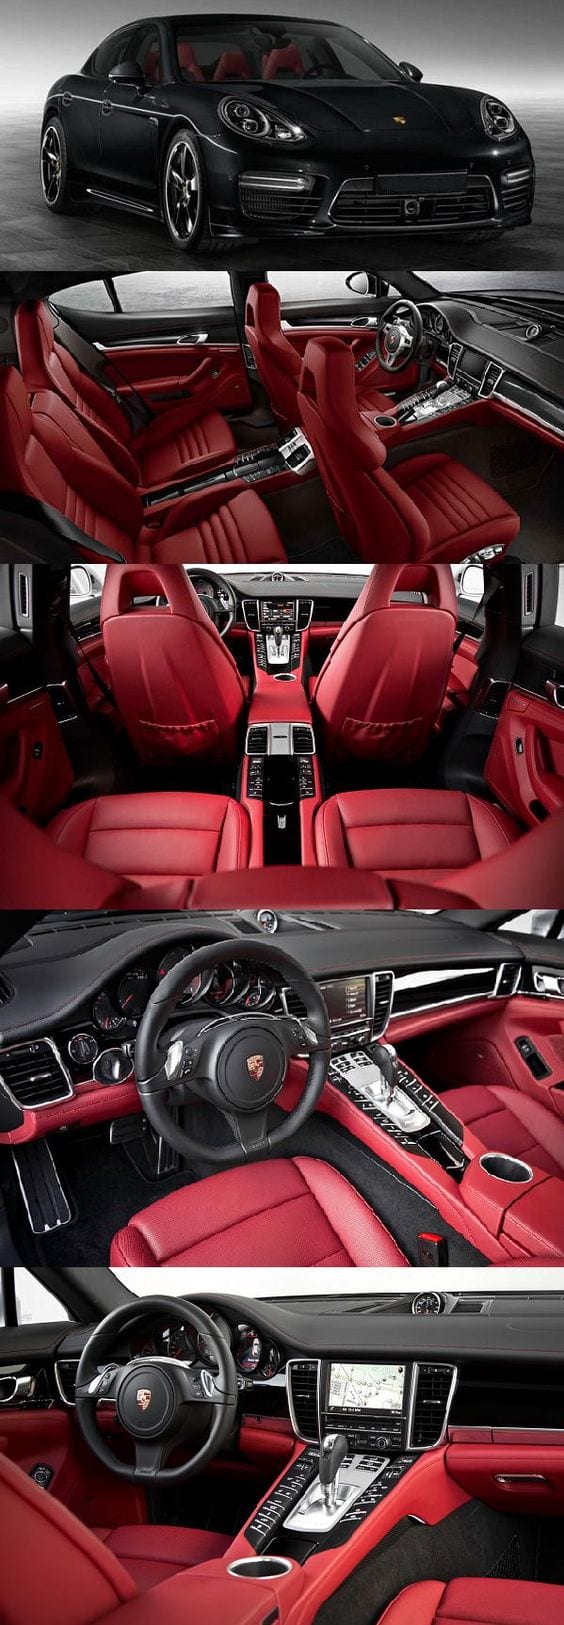 Porsche Panamera red interior